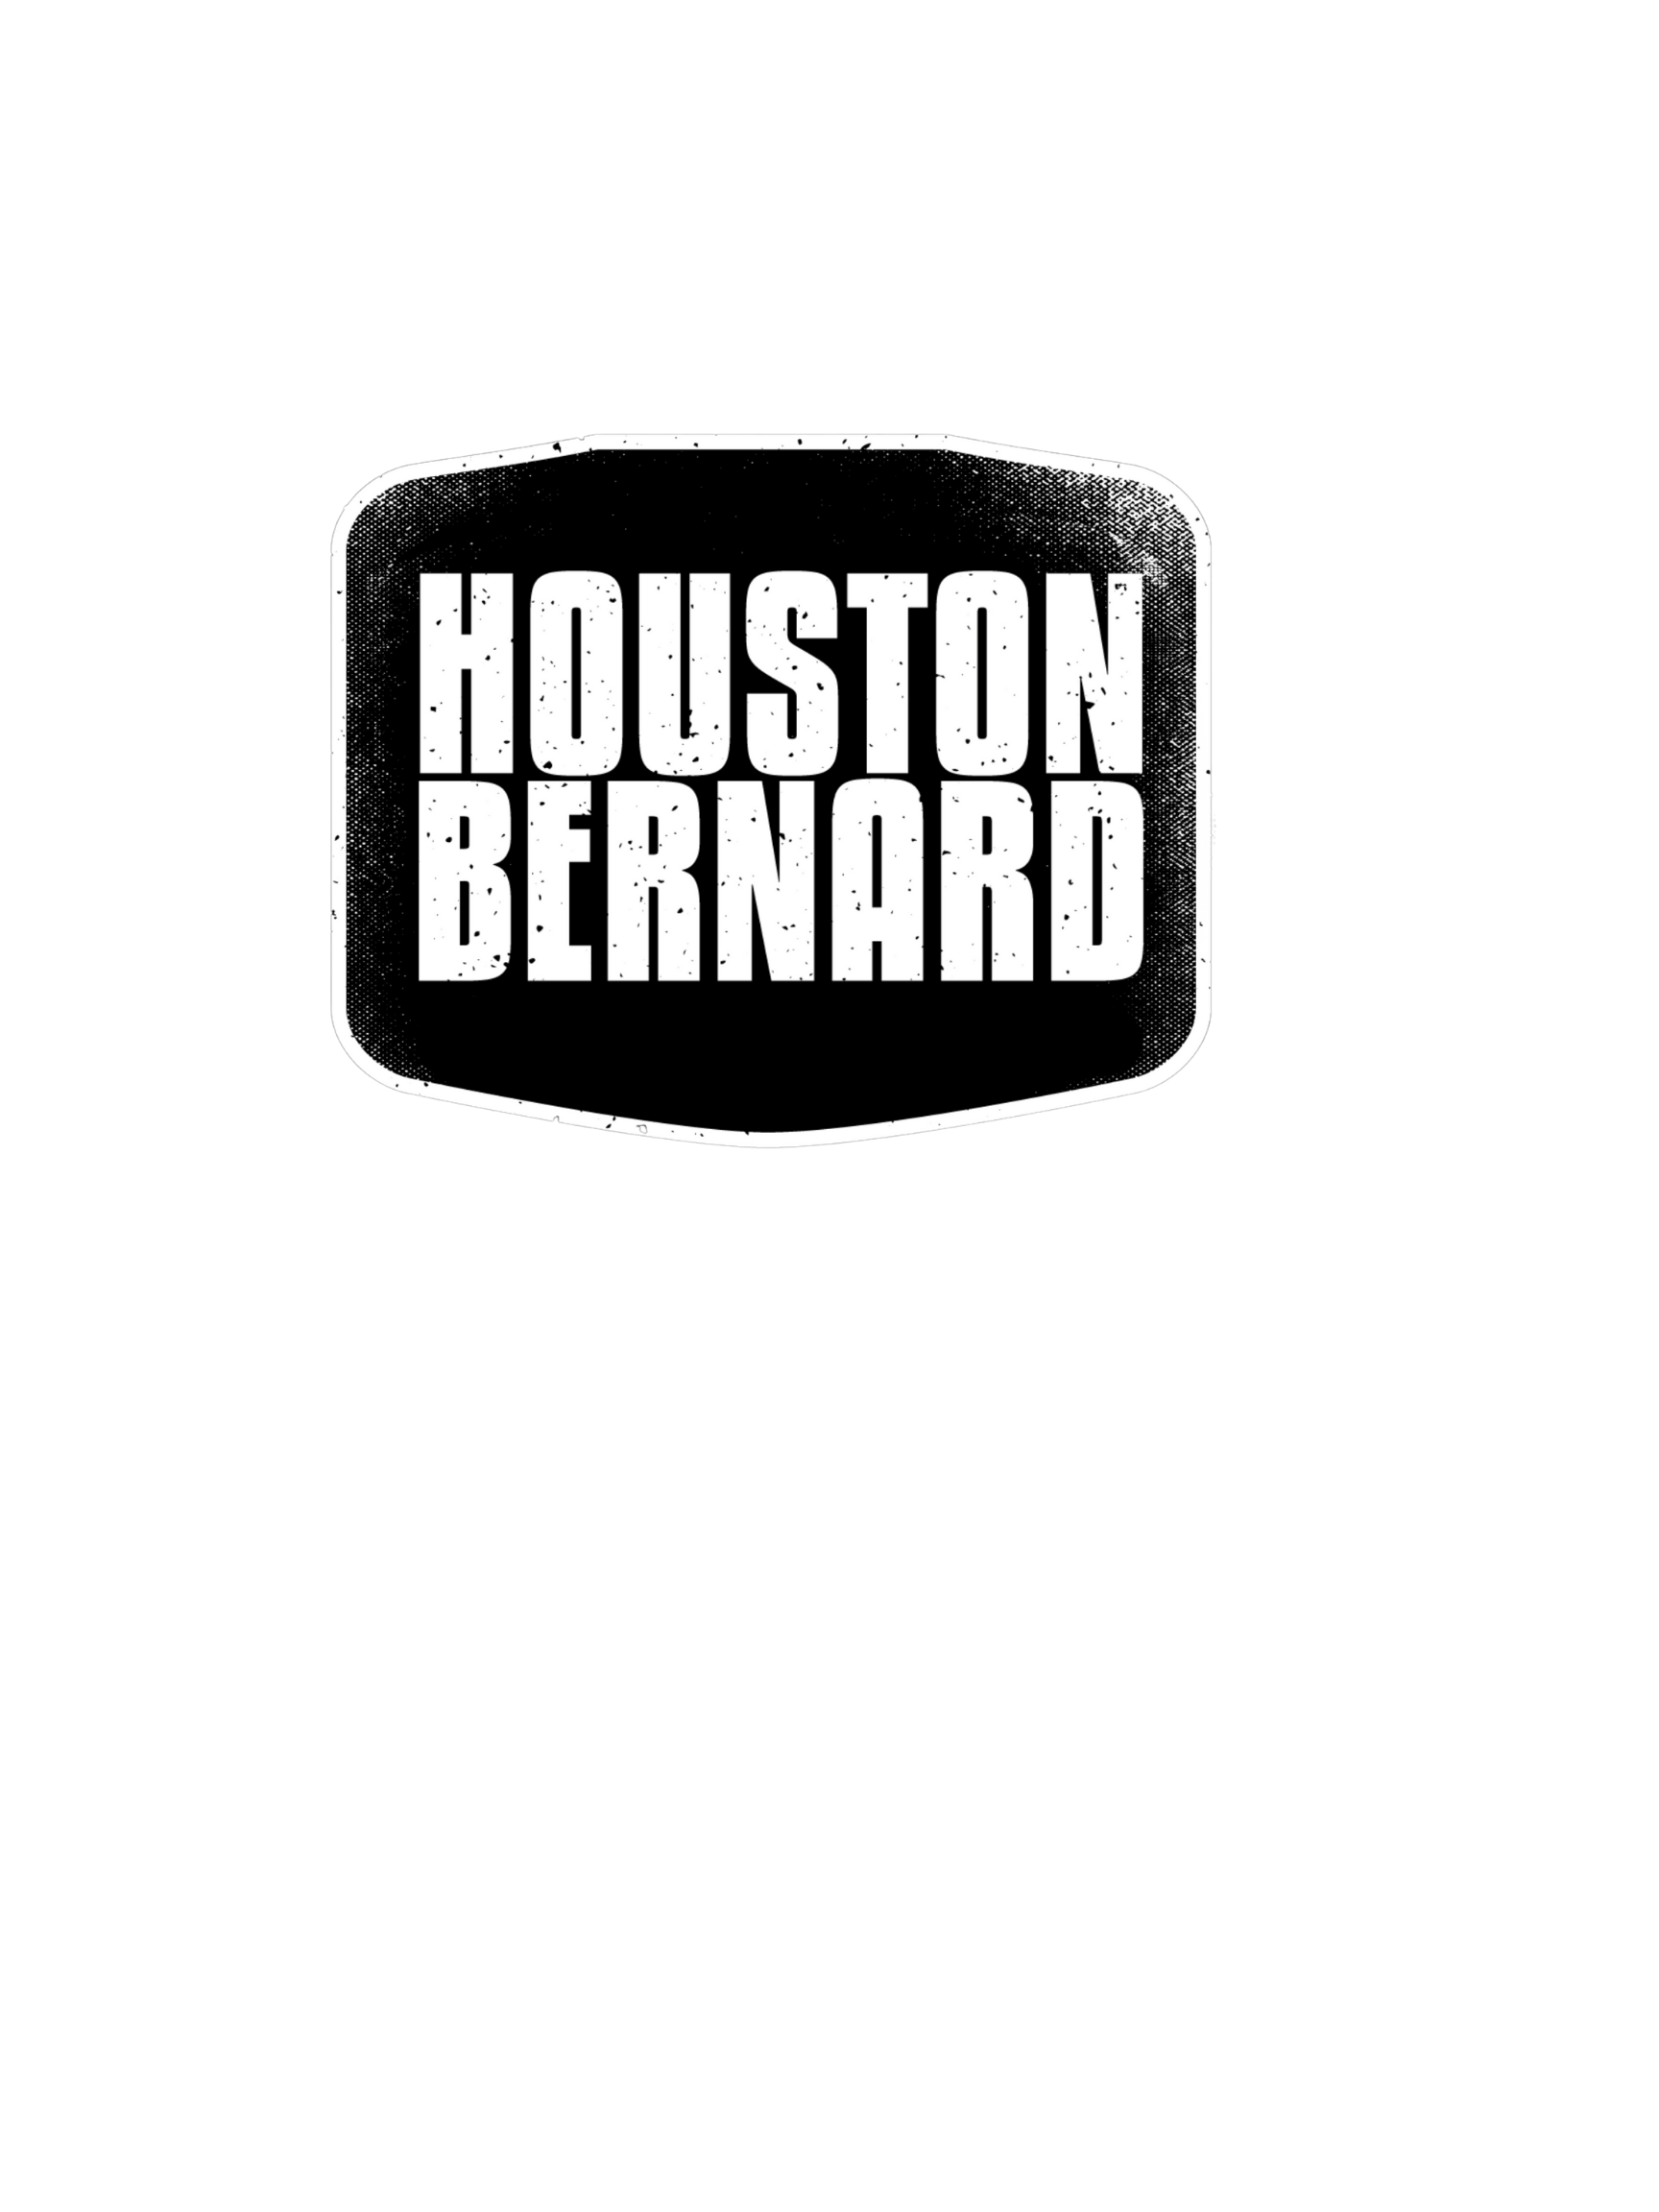 Houston Bernard